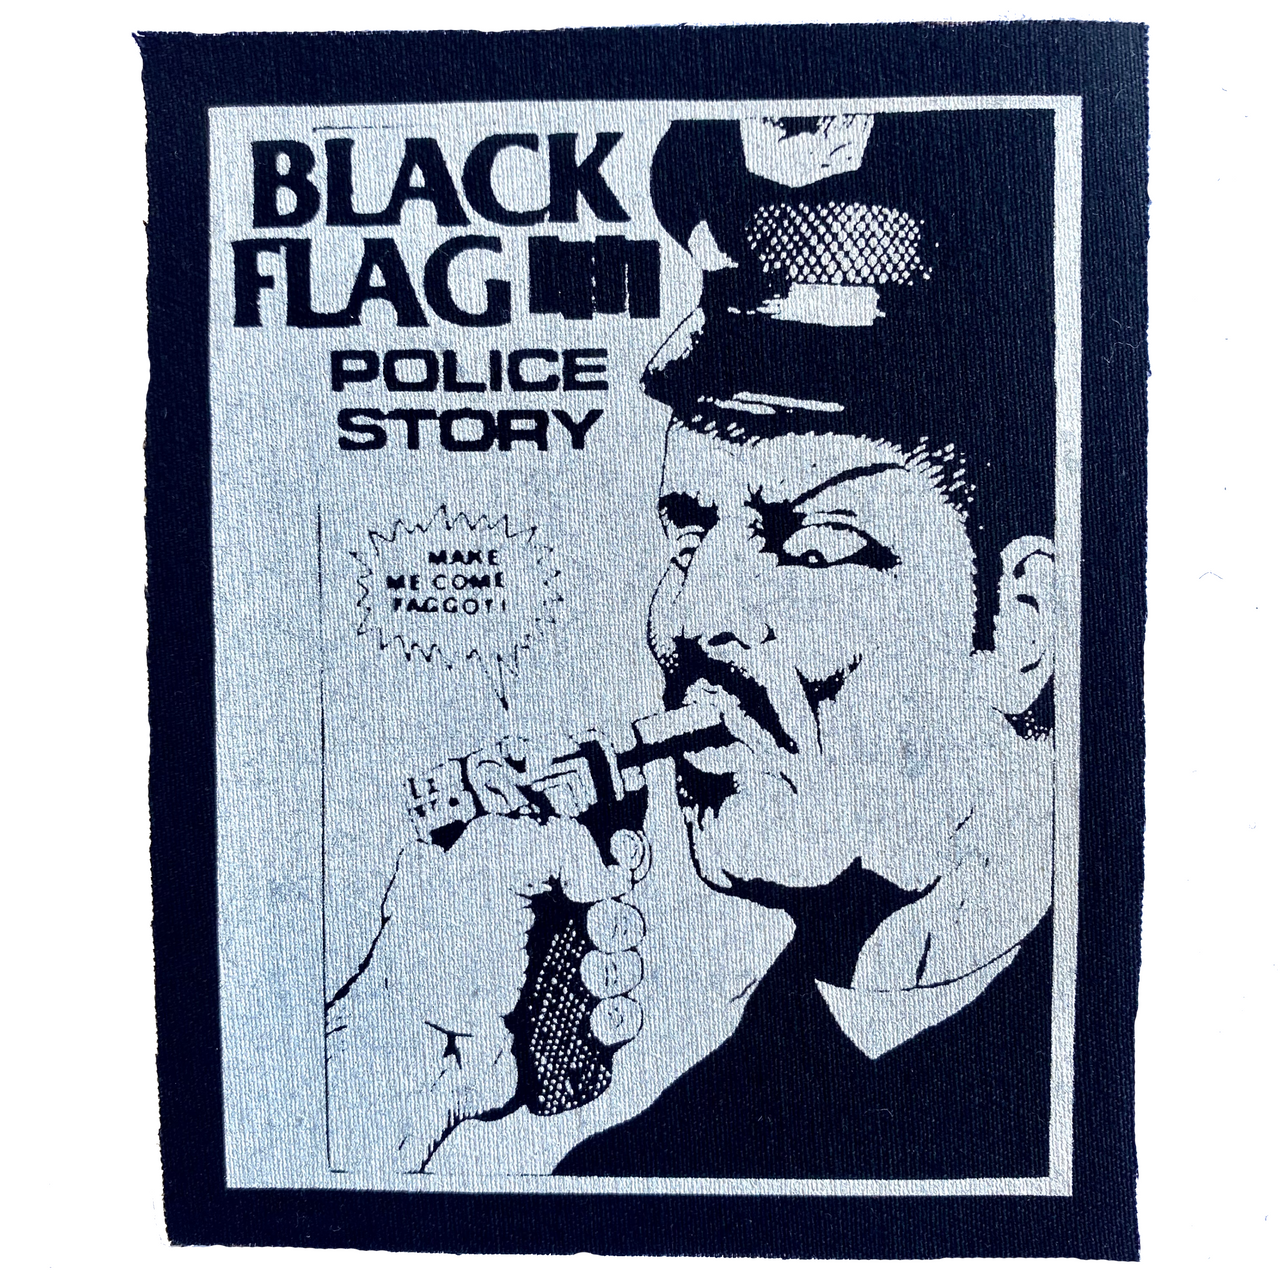 Black Flag Police Story Cloth Patch